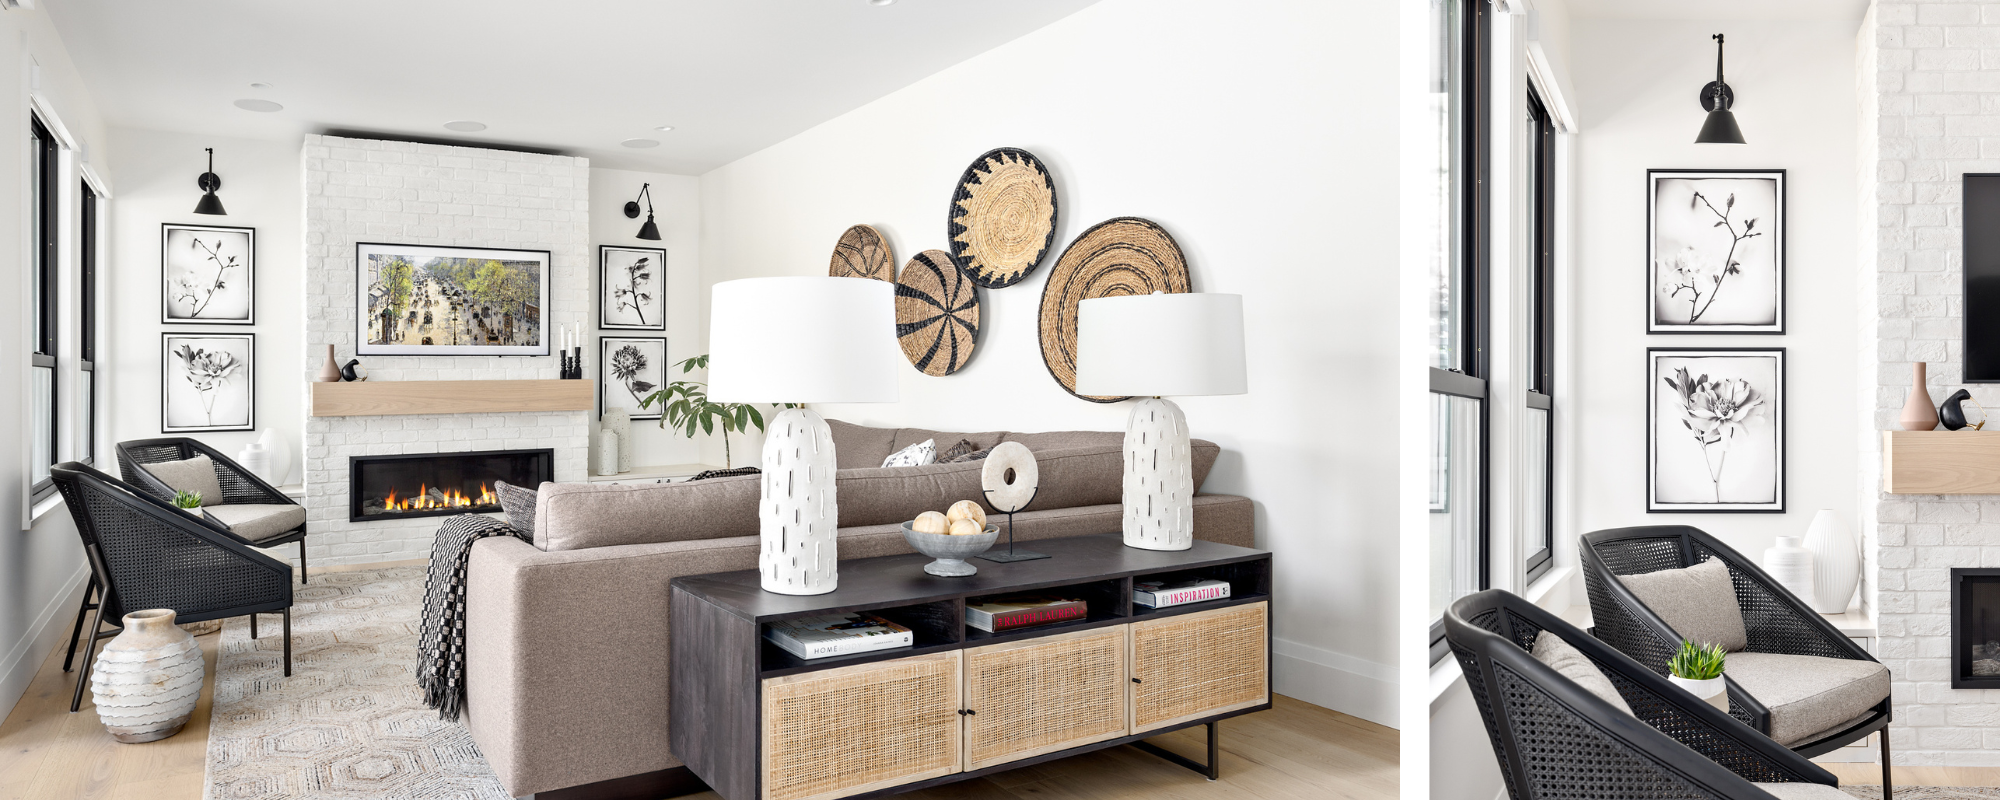 Simply Home-larkhall-north-vancouver-botanical-prints-modern-black-white-living-room-interior-decor